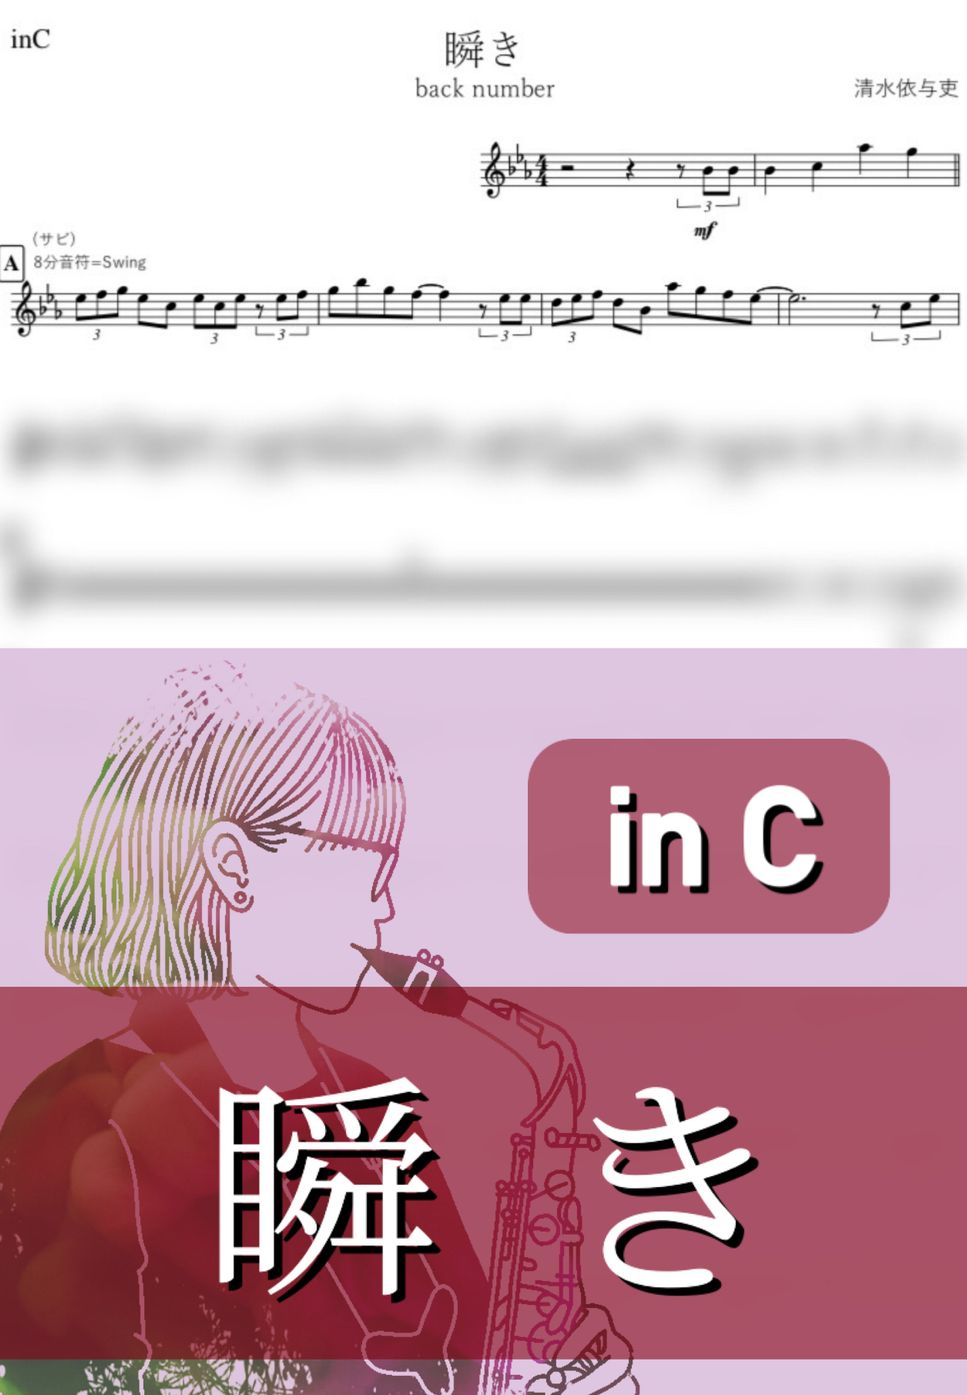 back number - 瞬き (C) by kanamusic